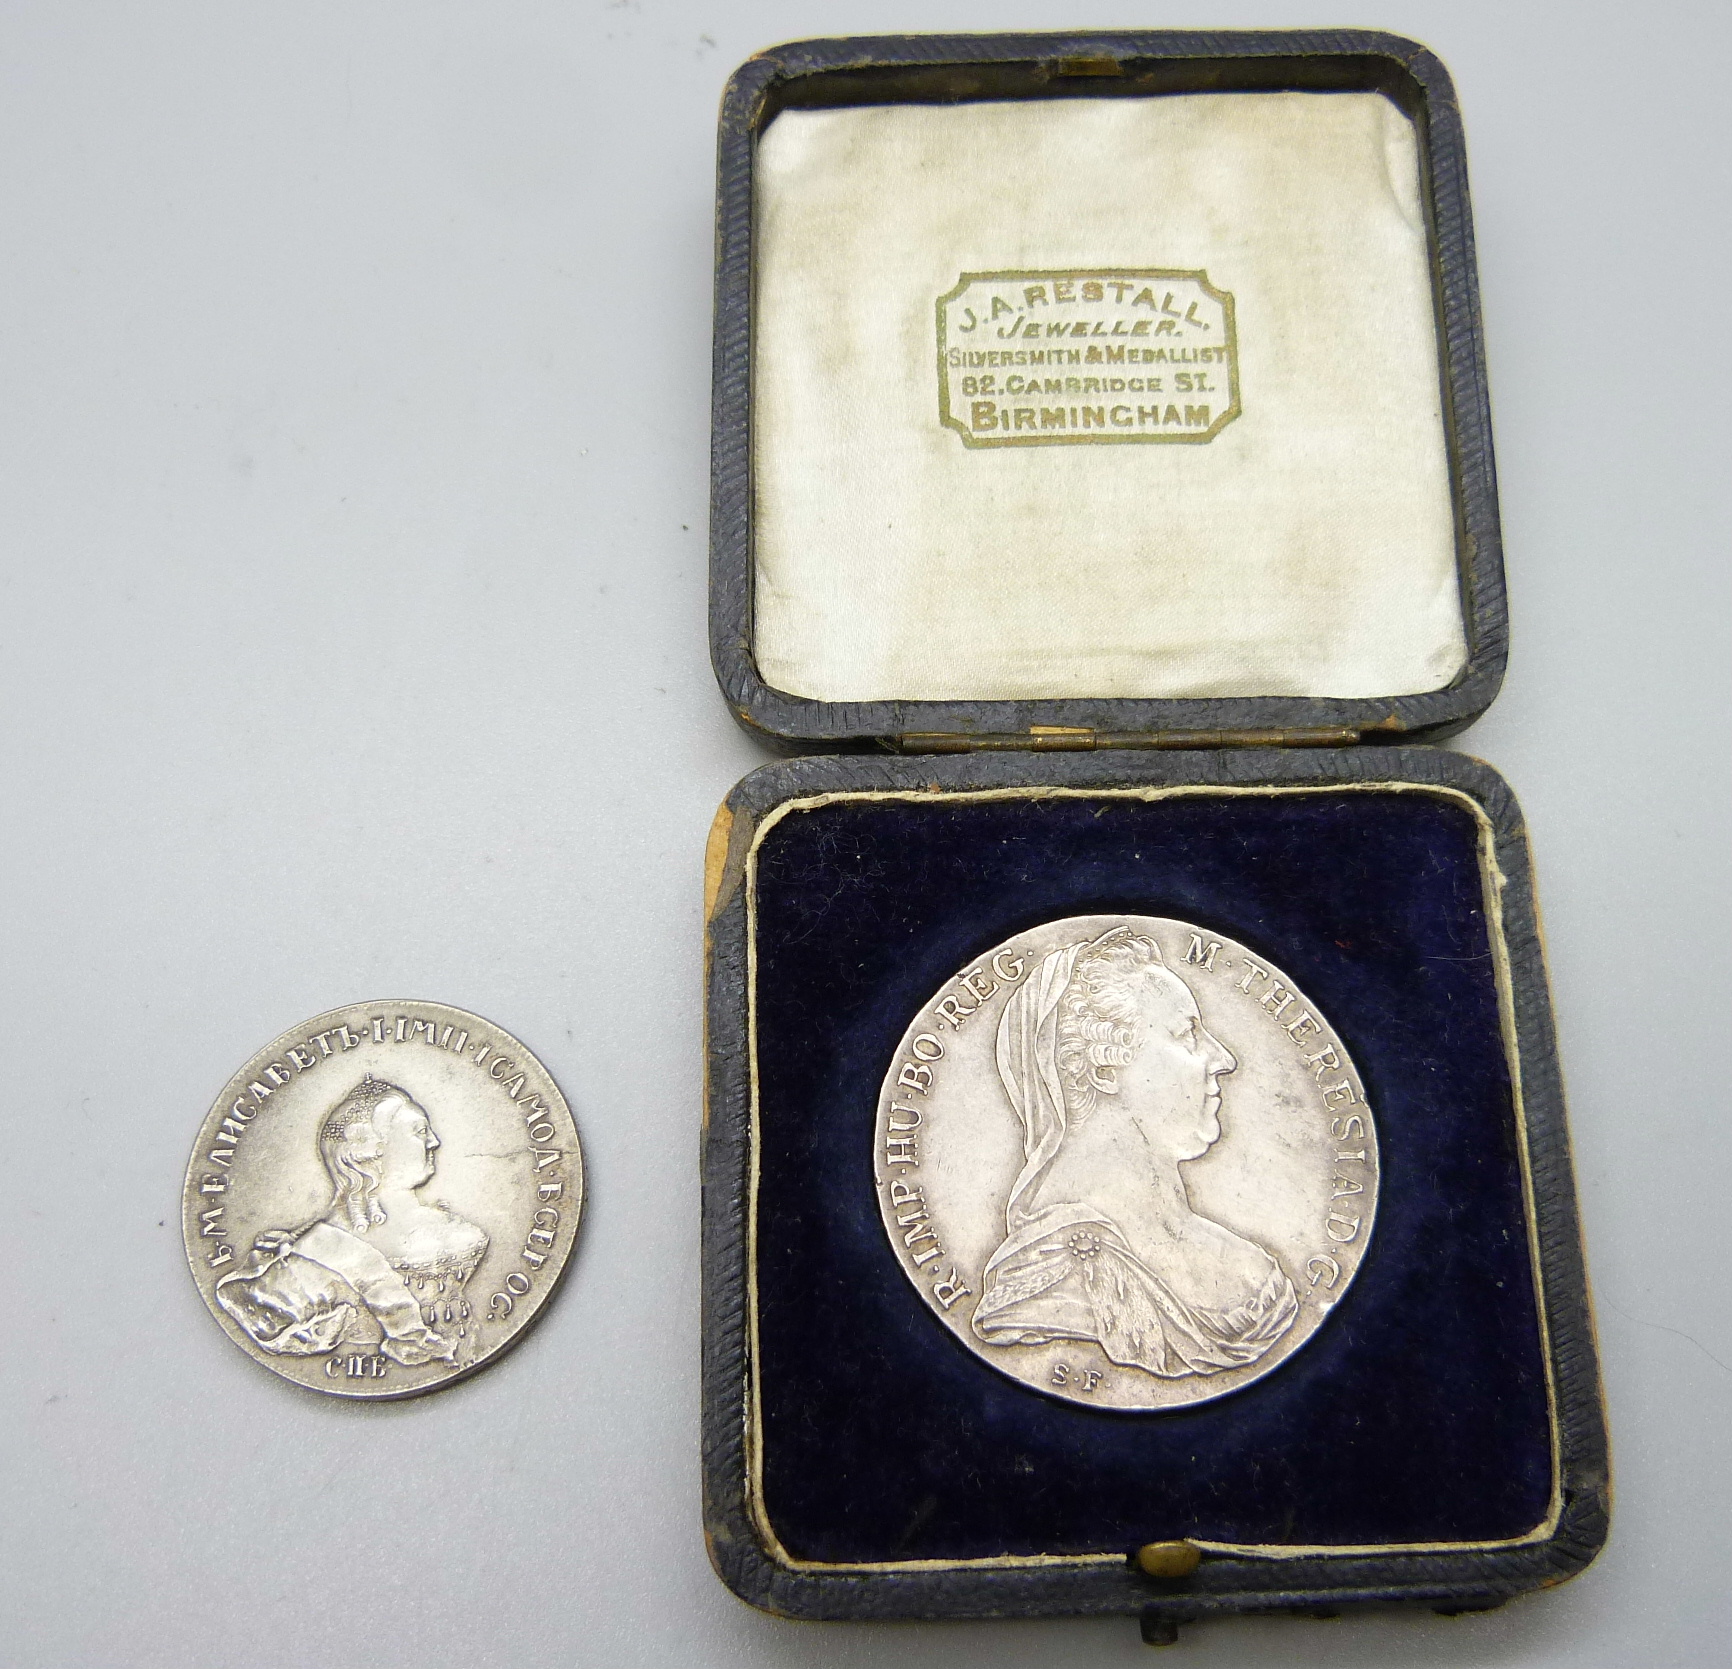 A Maria Theresia 1780 coin and a 1921 Austro-Hungarian coin